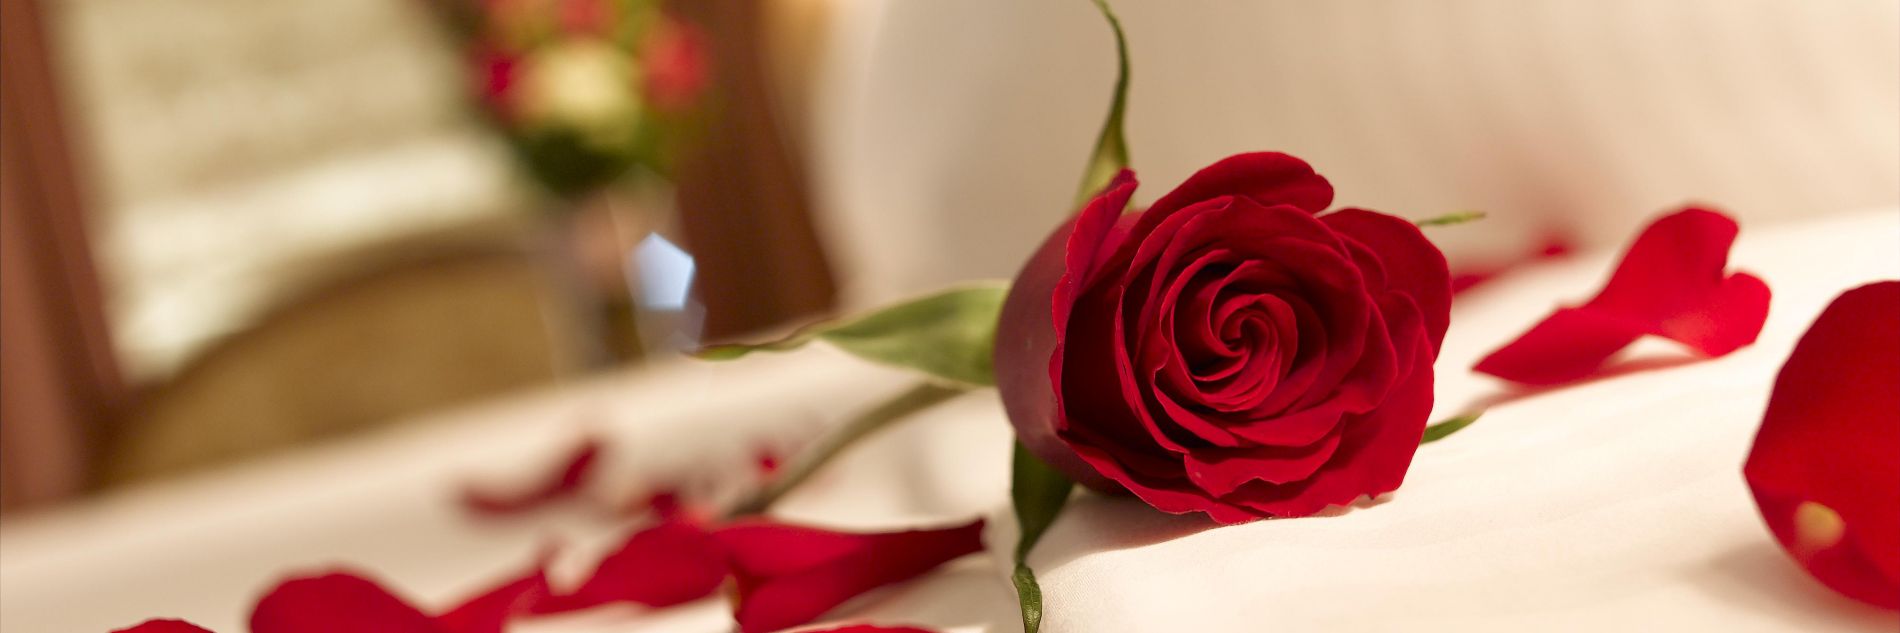 red-rose-petals-on-bed.jpg